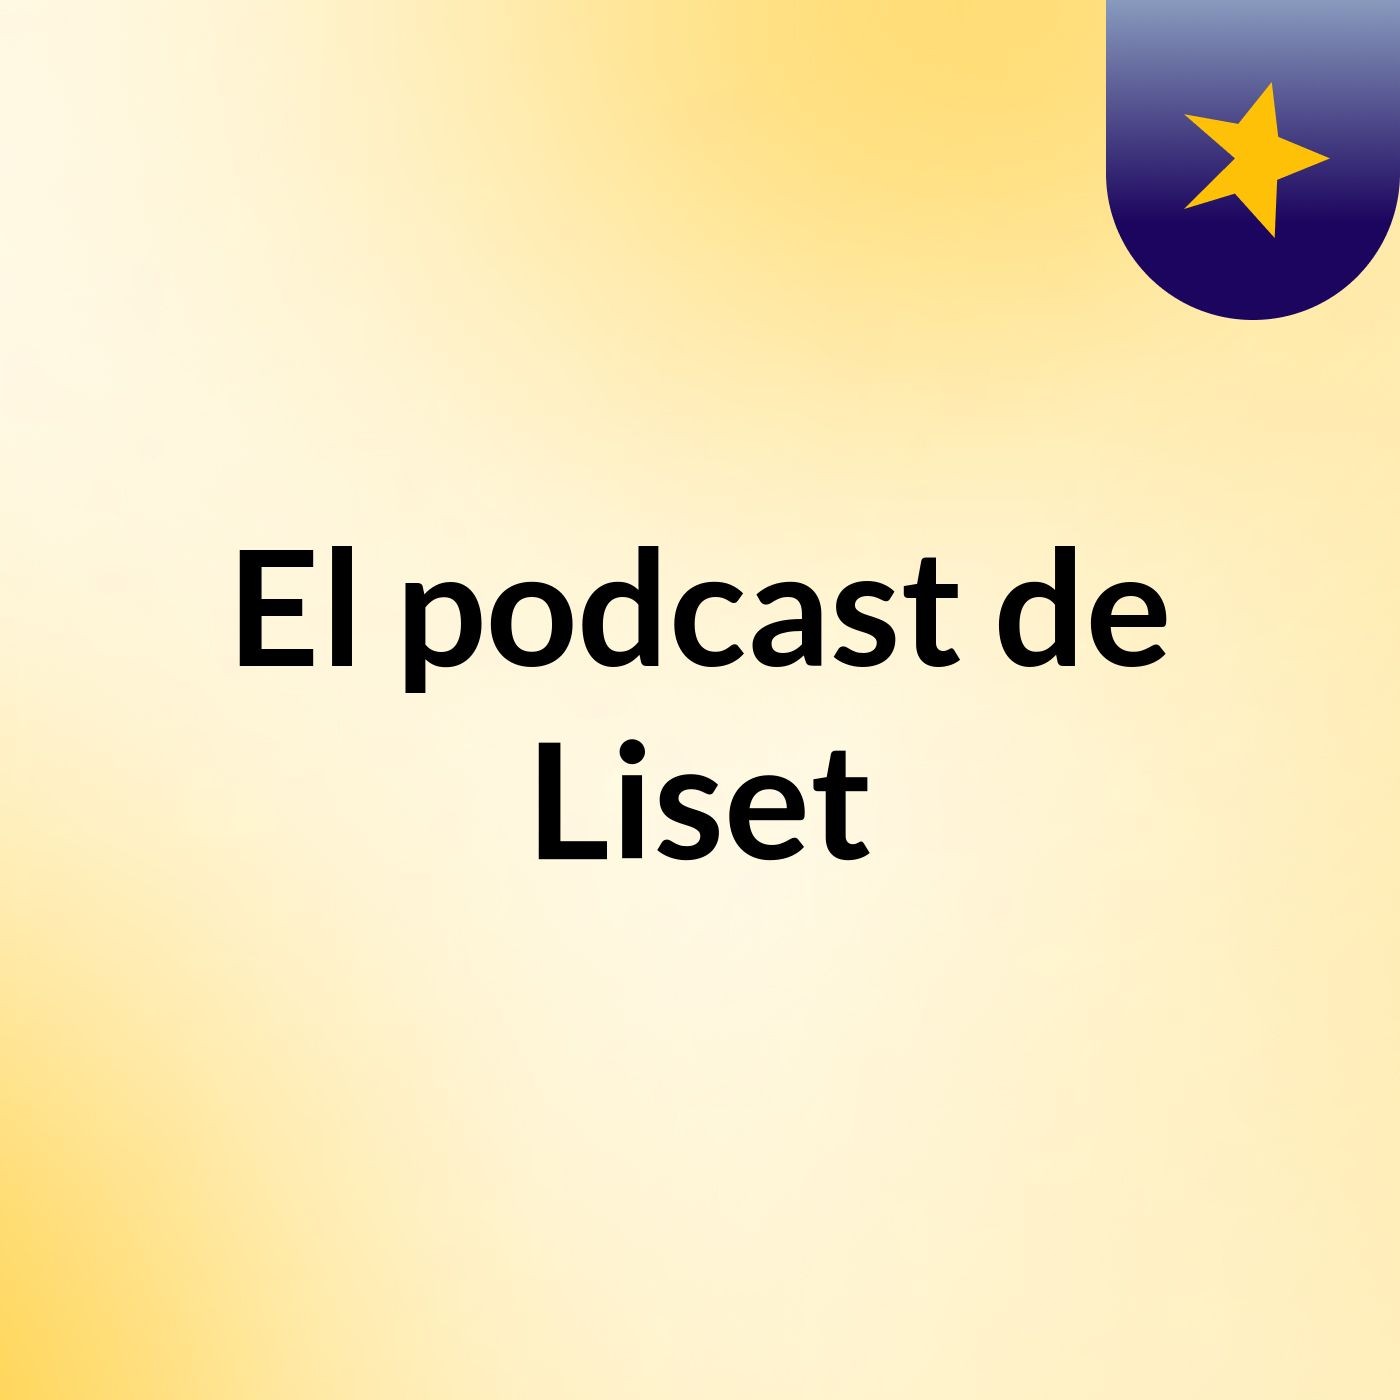 El podcast de Liset